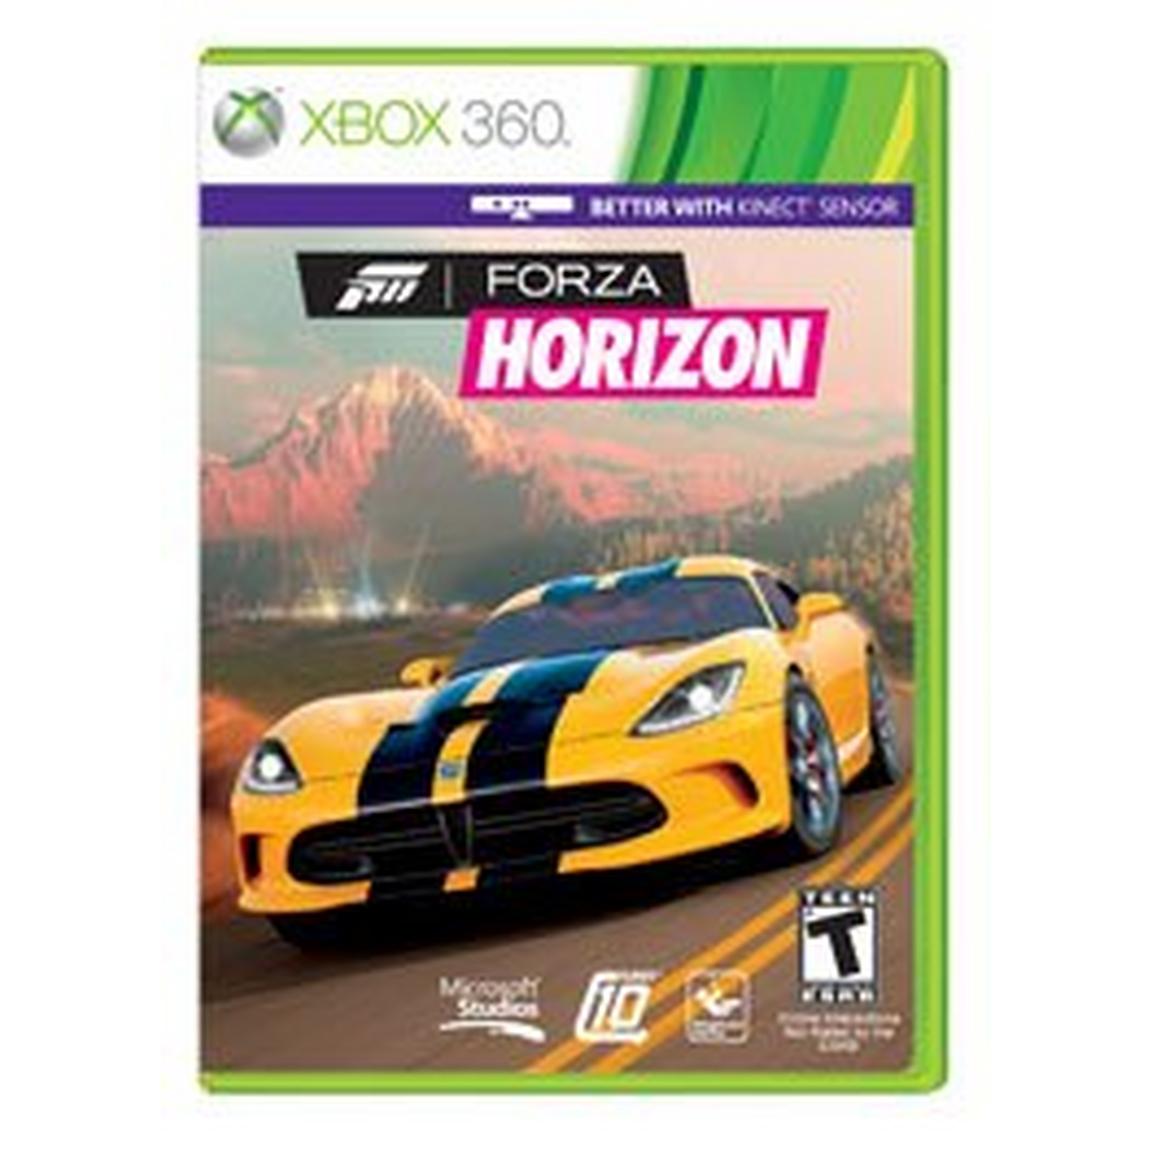 Forza Horizon - Xbox 360, Pre-Owned -  Microsoft